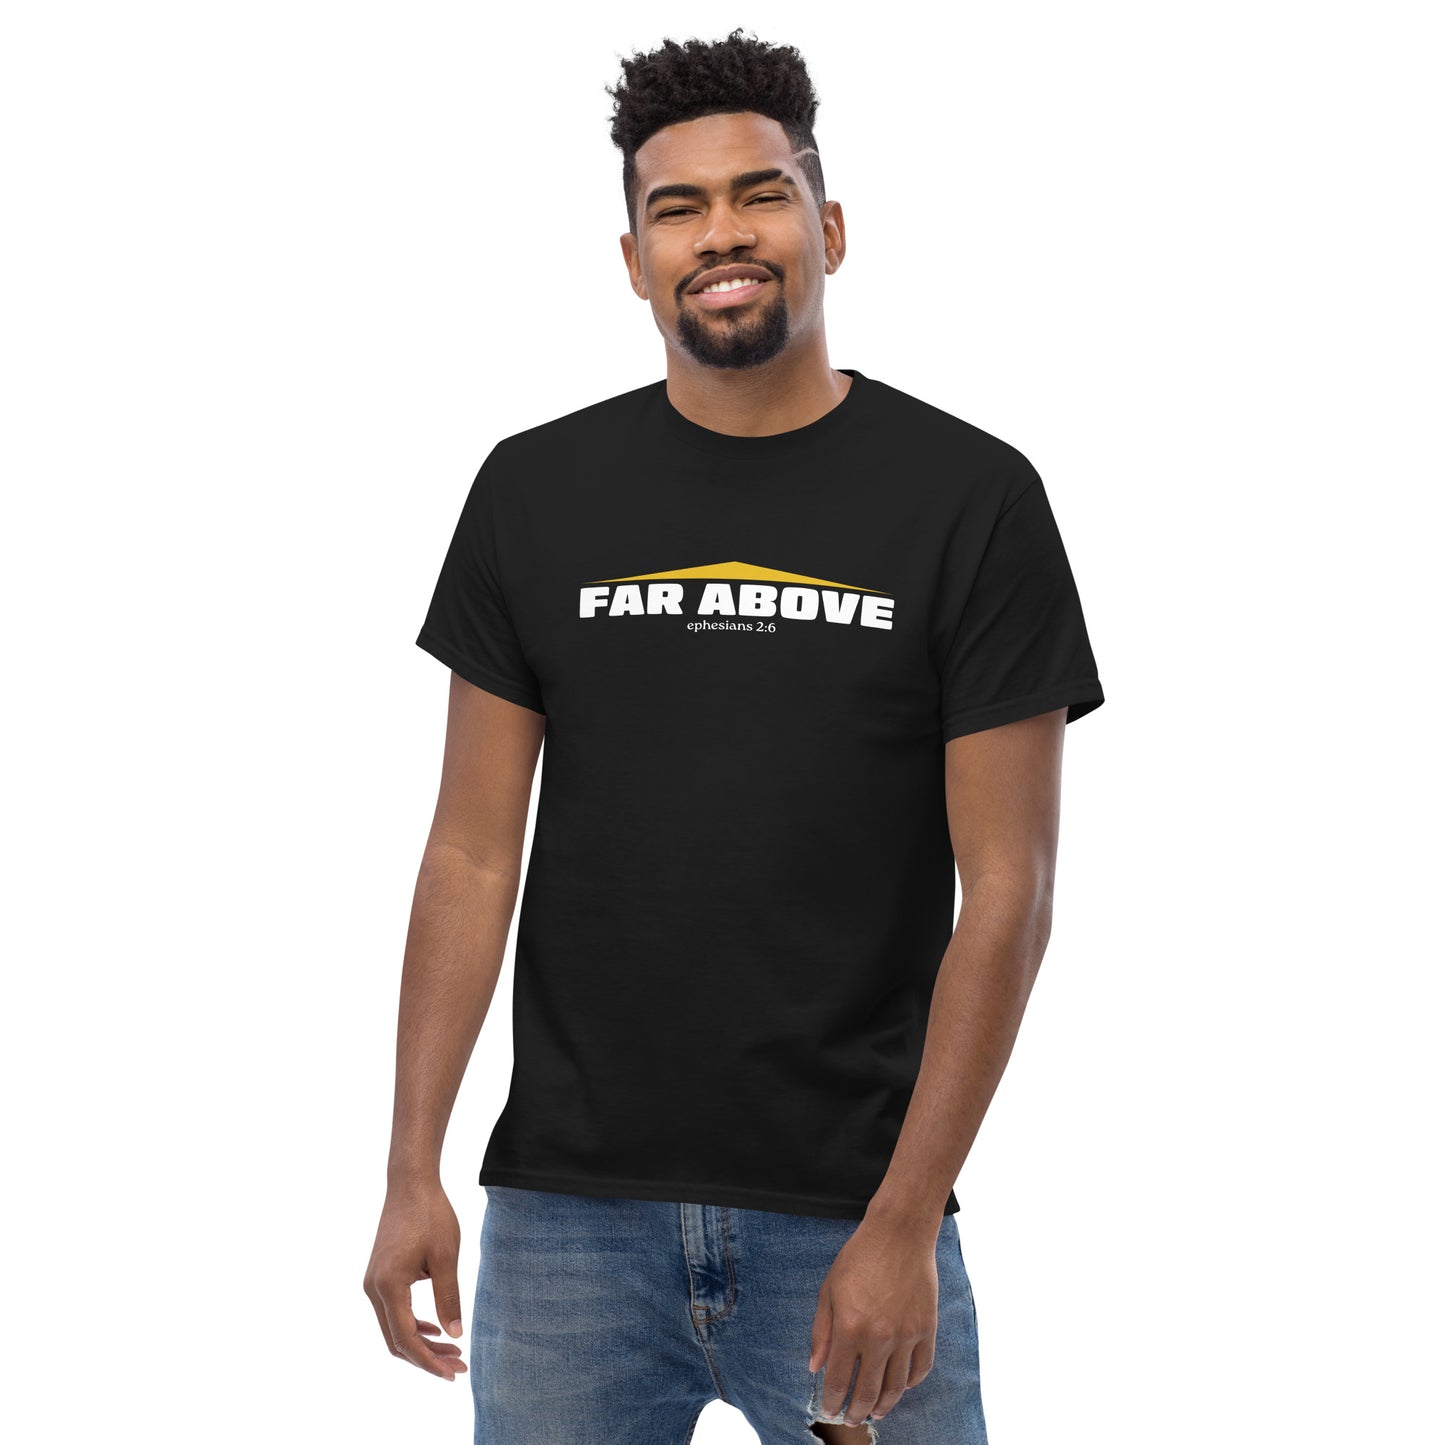 FAR ABOVE - Classic Men's T-Shirt